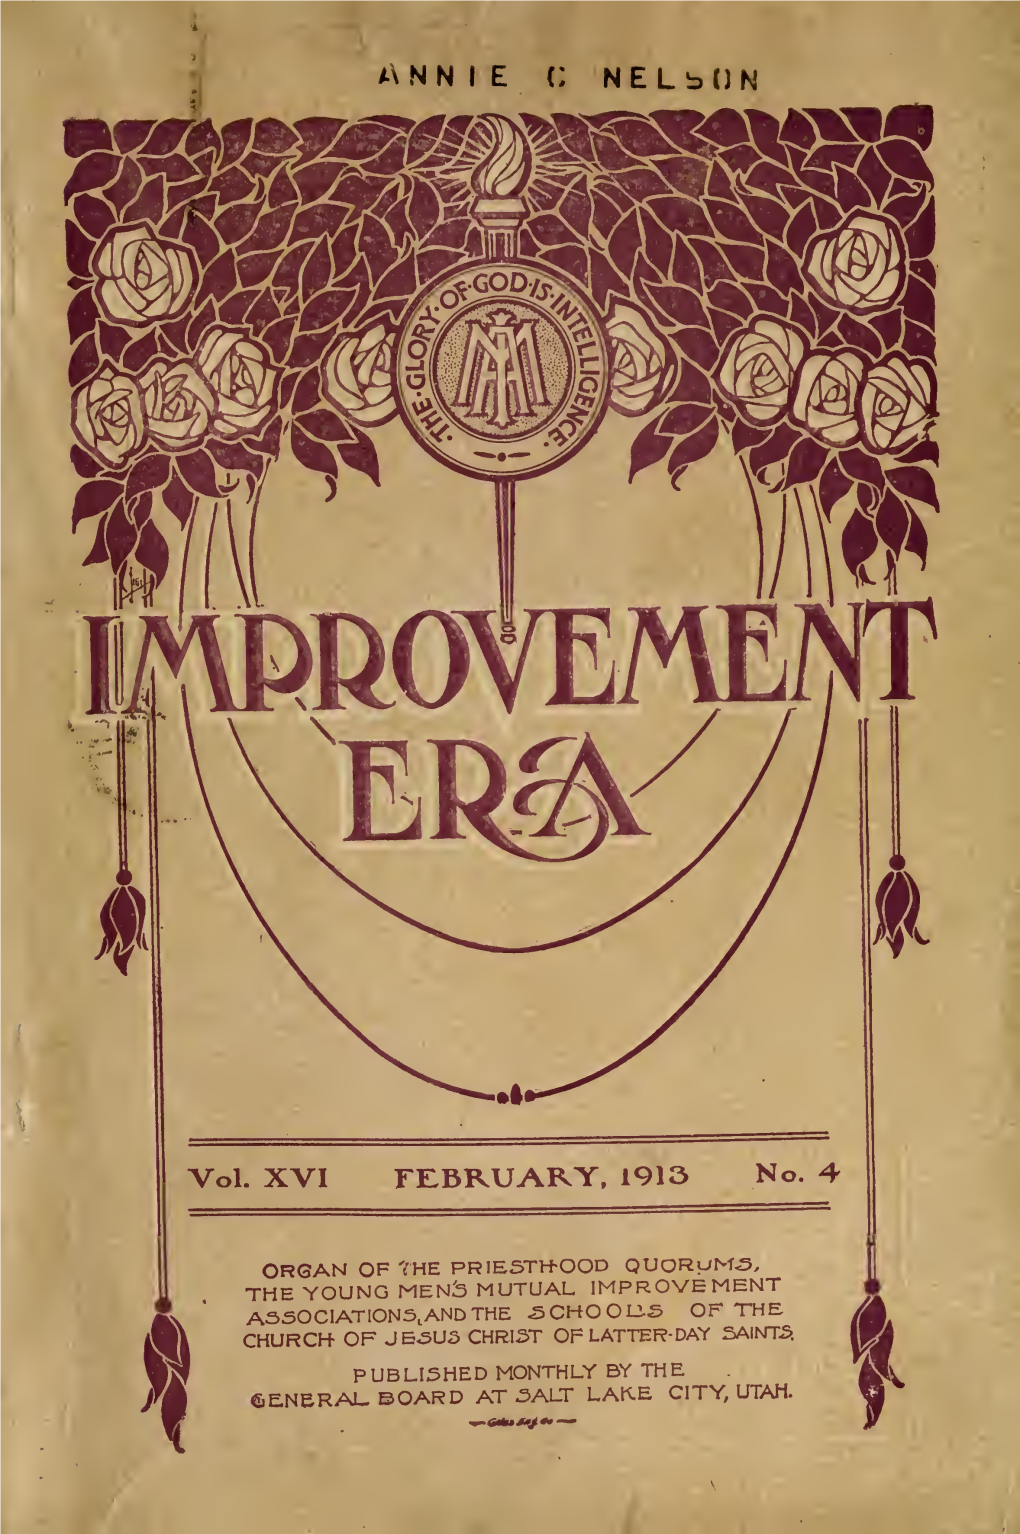 The Improvement Era